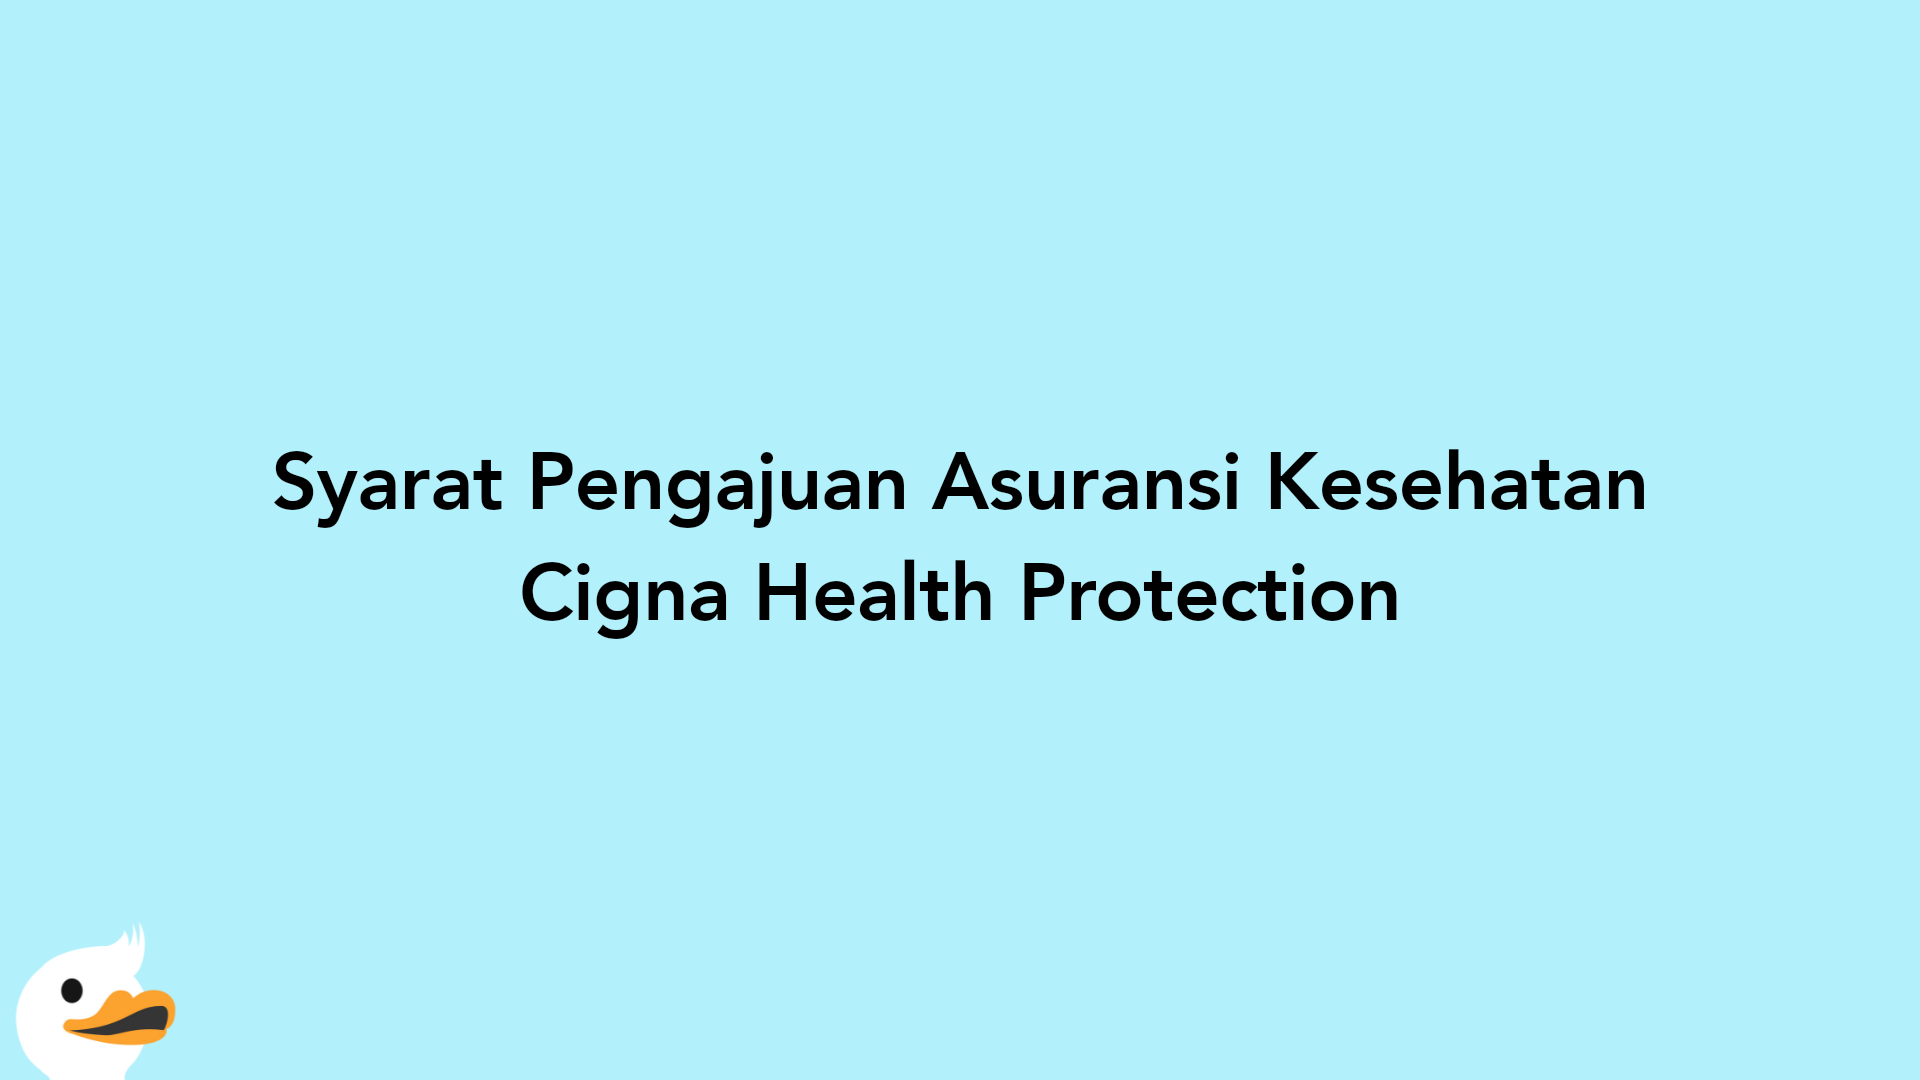 Syarat Pengajuan Asuransi Kesehatan Cigna Health Protection